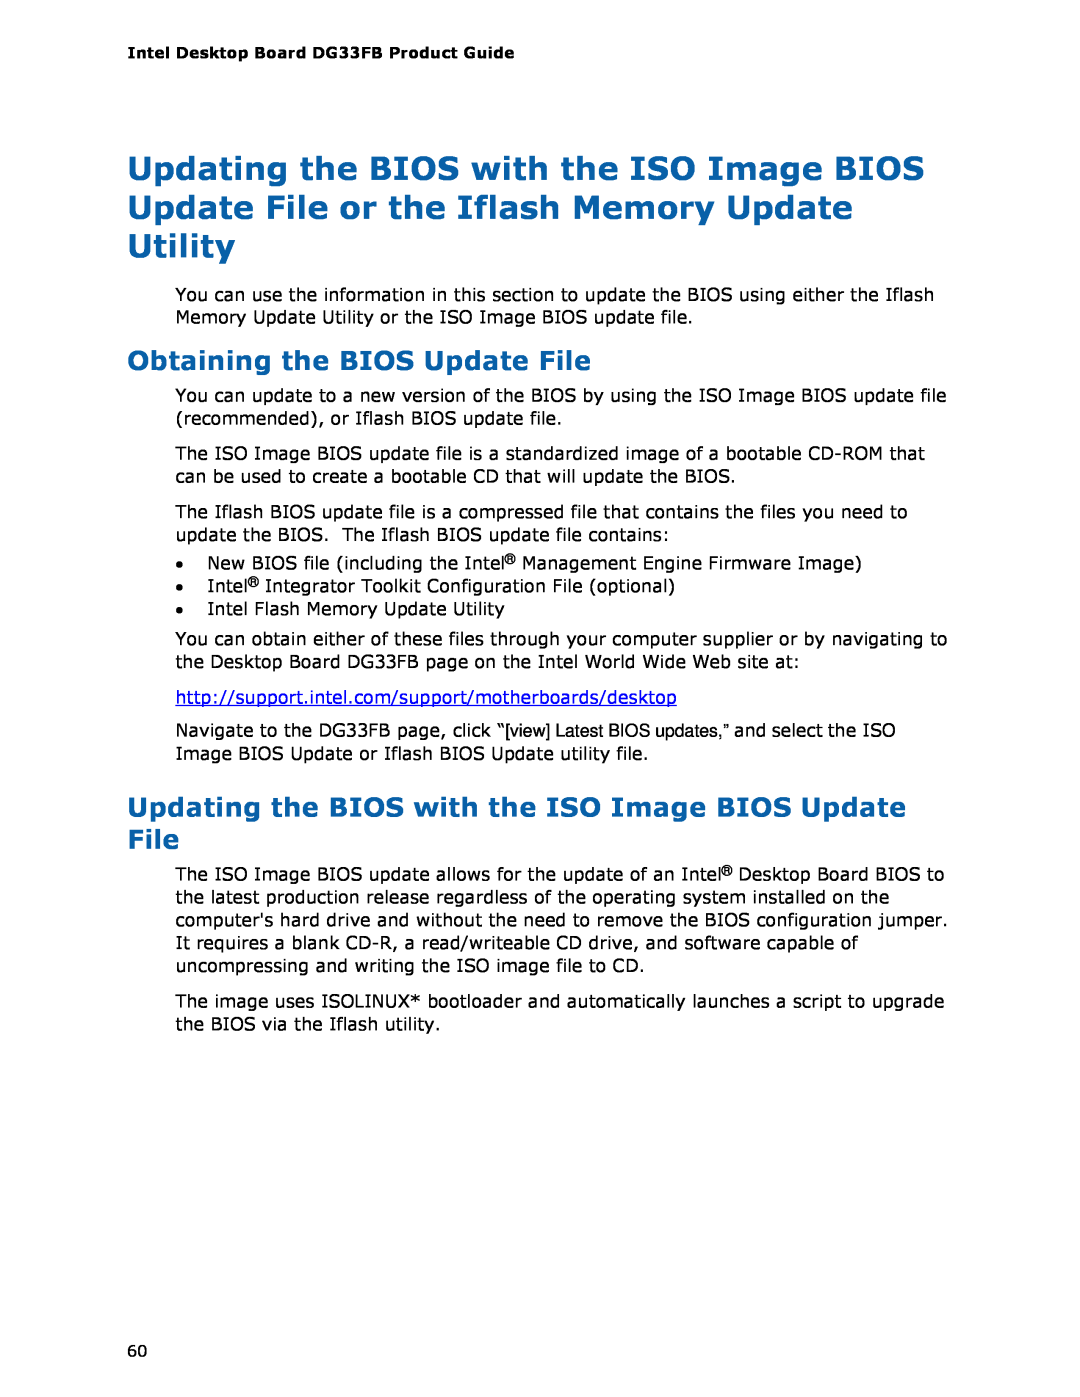 Intel DG33FB manual Obtaining the BIOS Update File 